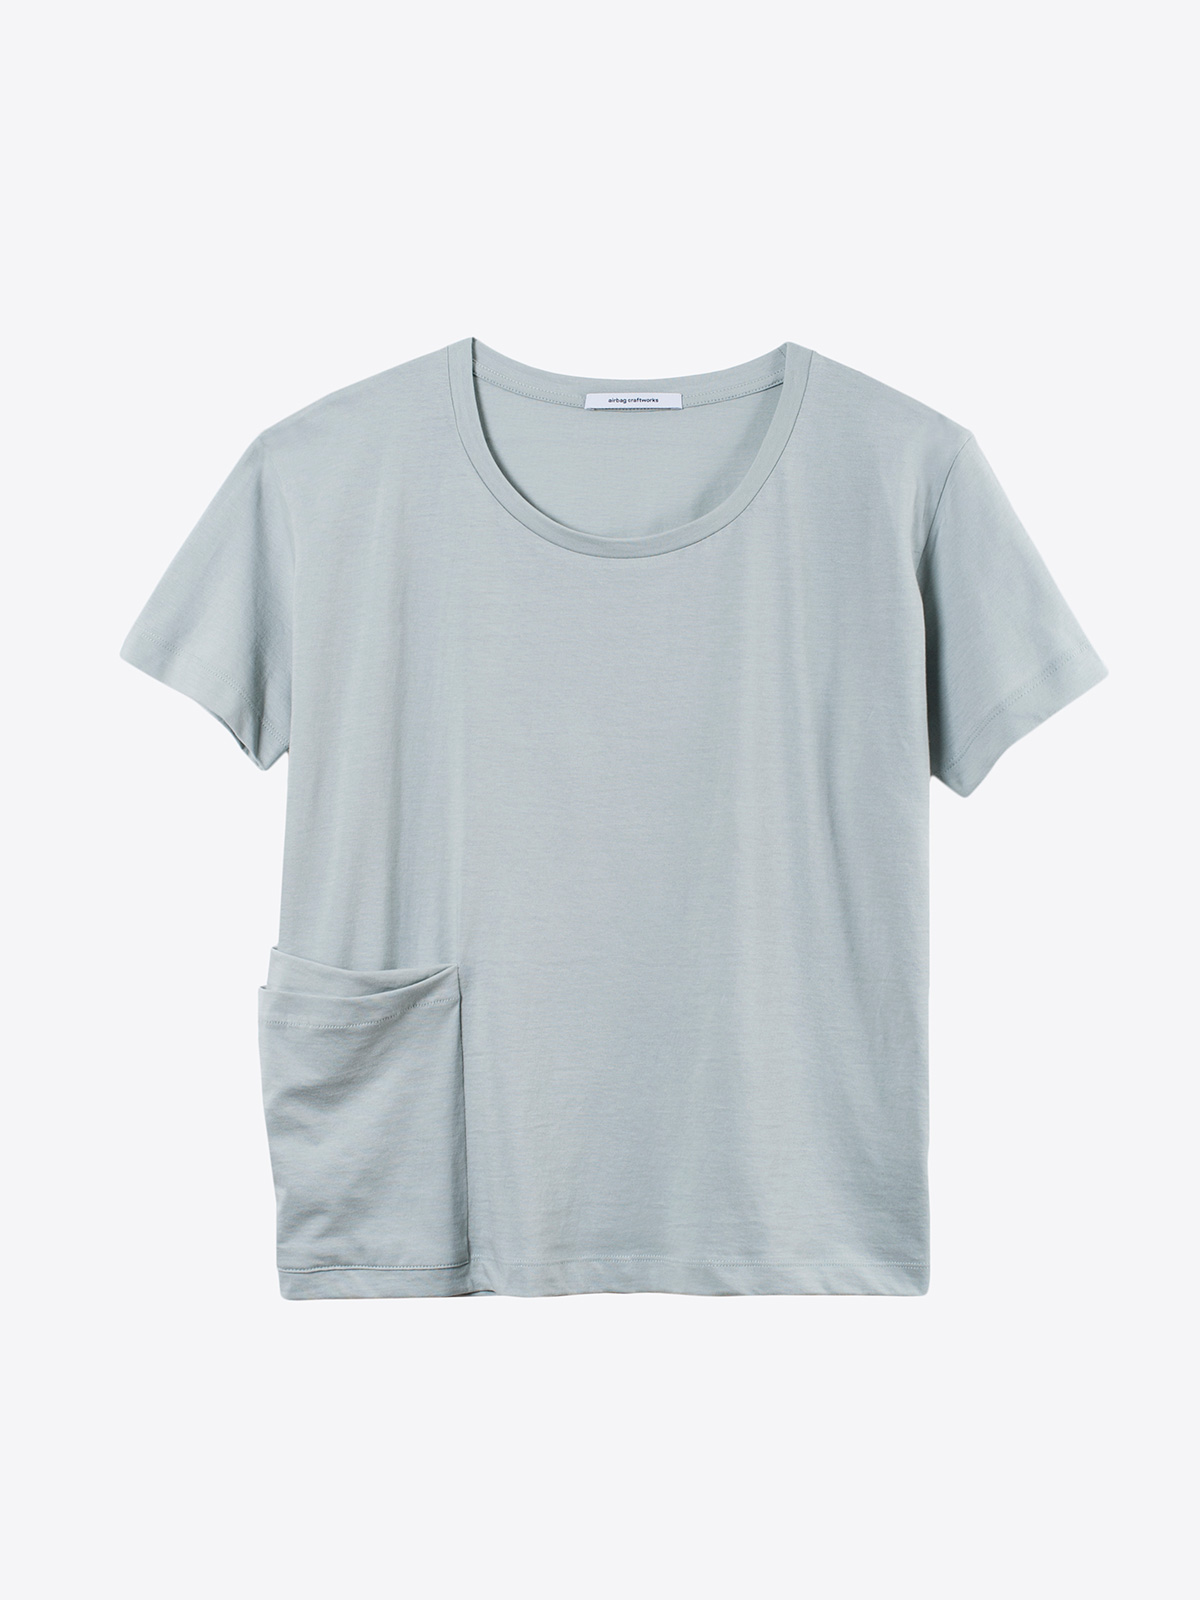 A2 womens pick pocket shirt | mirage grey